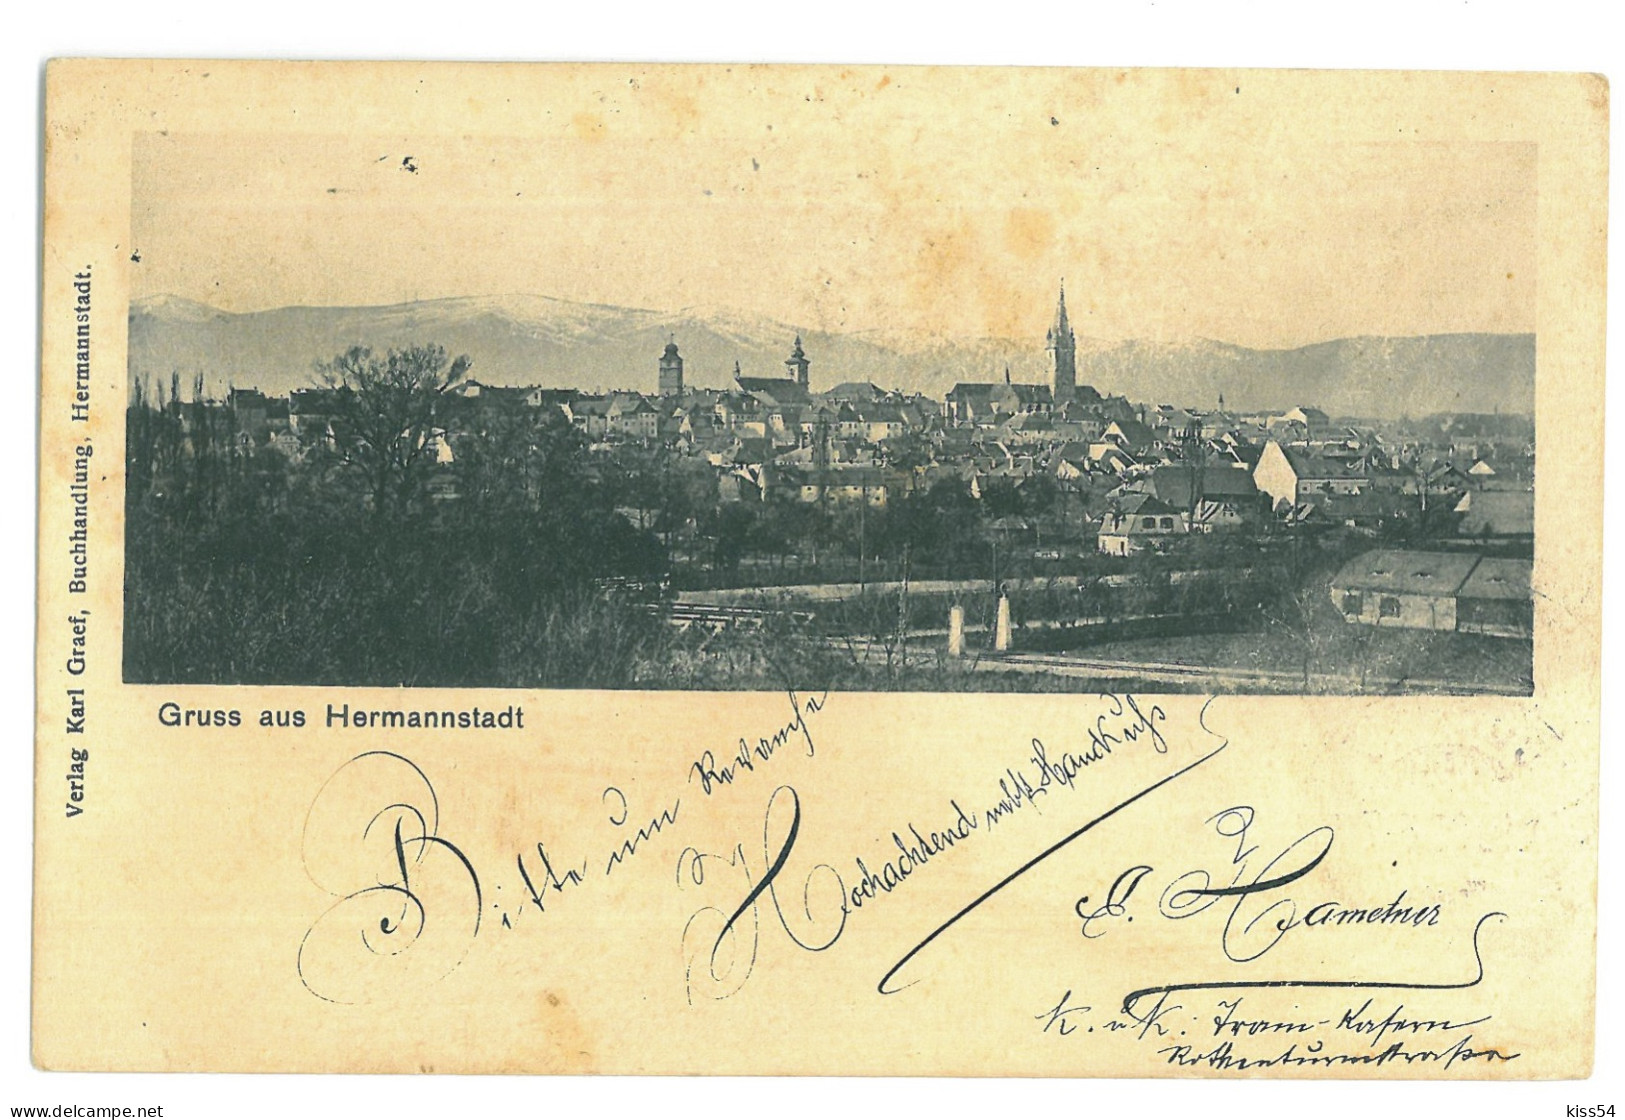 RO 69 - 22439 SIBIU, Panorama, Litho, Romania - Old Postcard - Used - 1903 - Rumänien